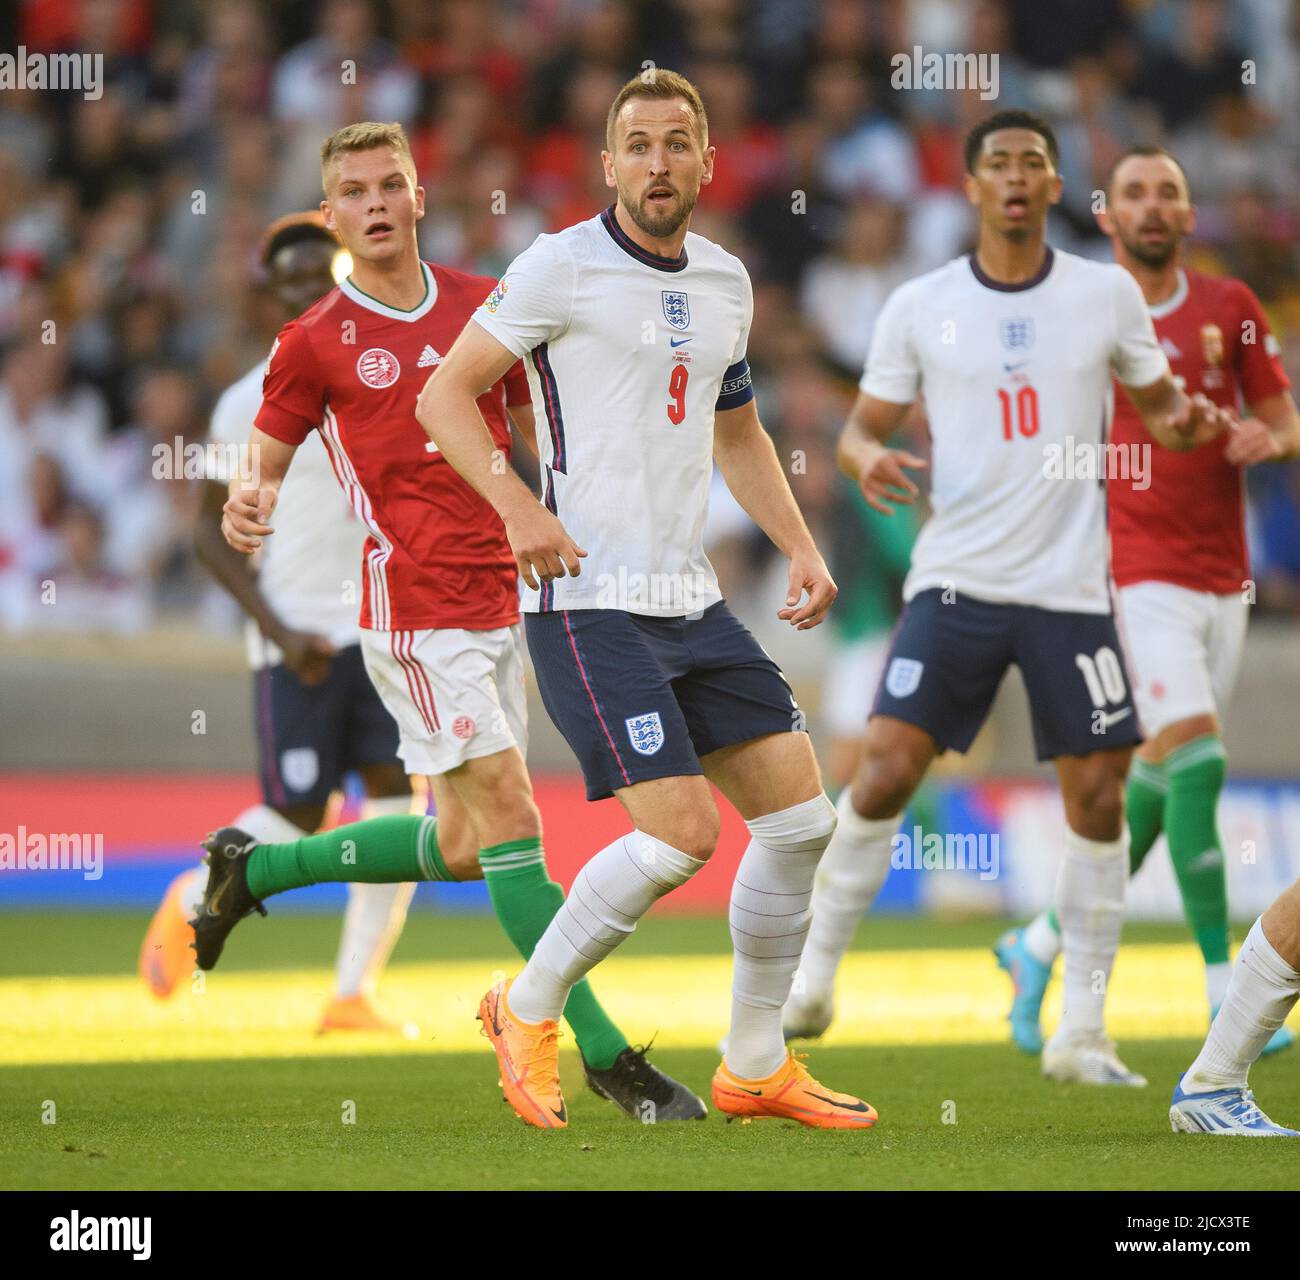 14 Jun 2022 - England v Hungary - UEFA Nations League - Group 3 - Molineux Stadium  England's Harry Kane during the UEFA Nations League match against Hungary. Picture Credit : © Mark Pain / Alamy Live News Stock Photo